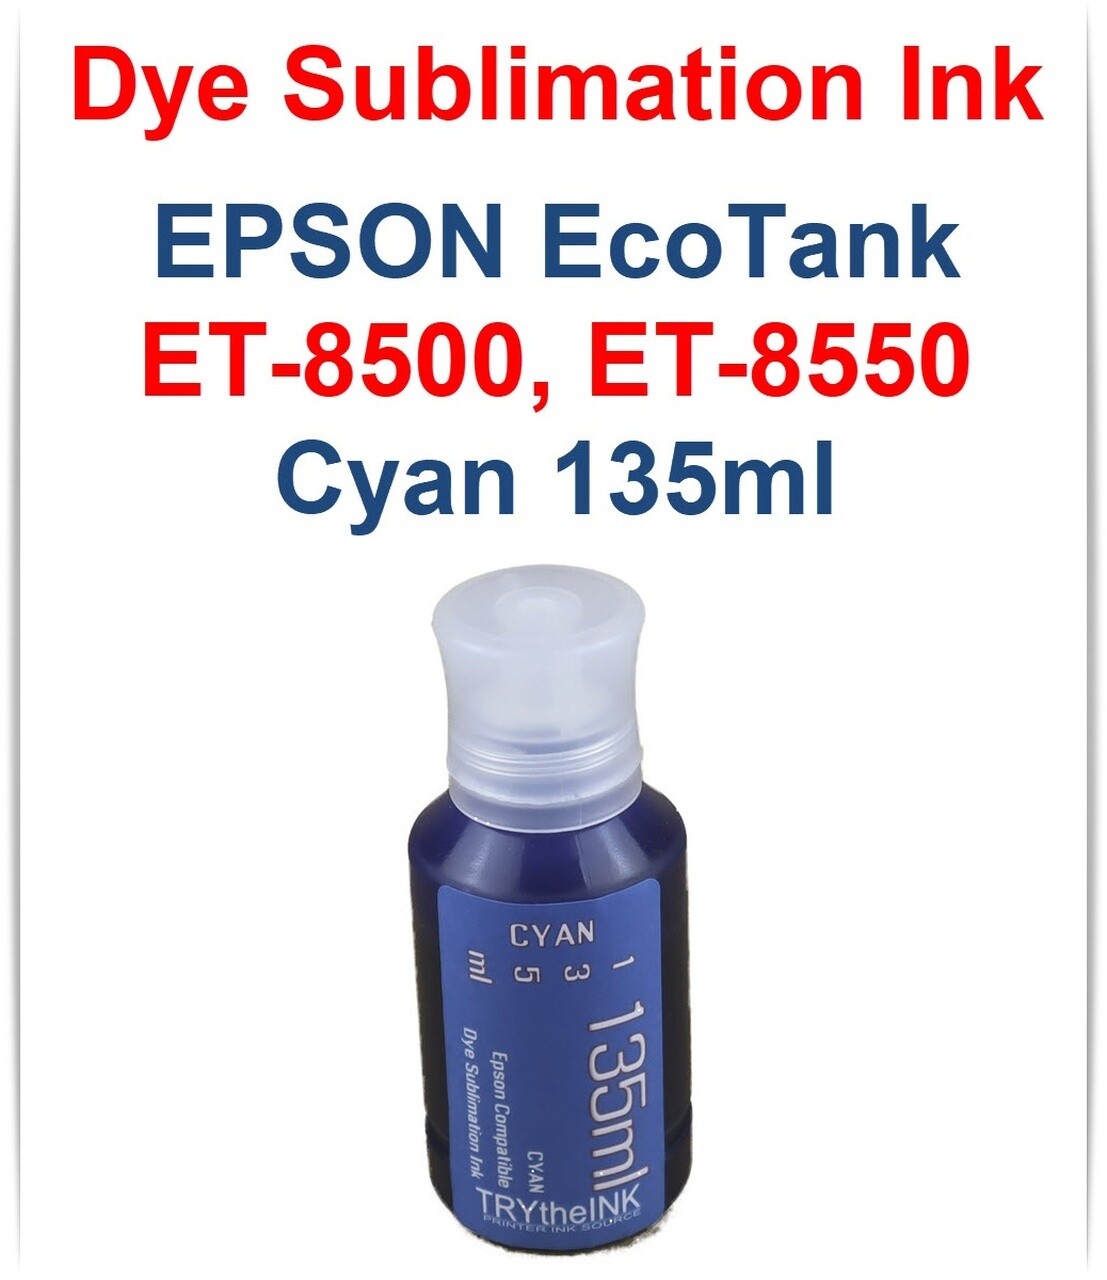 Cyan Dye Sublimation Ink 135ml bottle for EPSON EcoTank ET-8500 ET-8550 printers